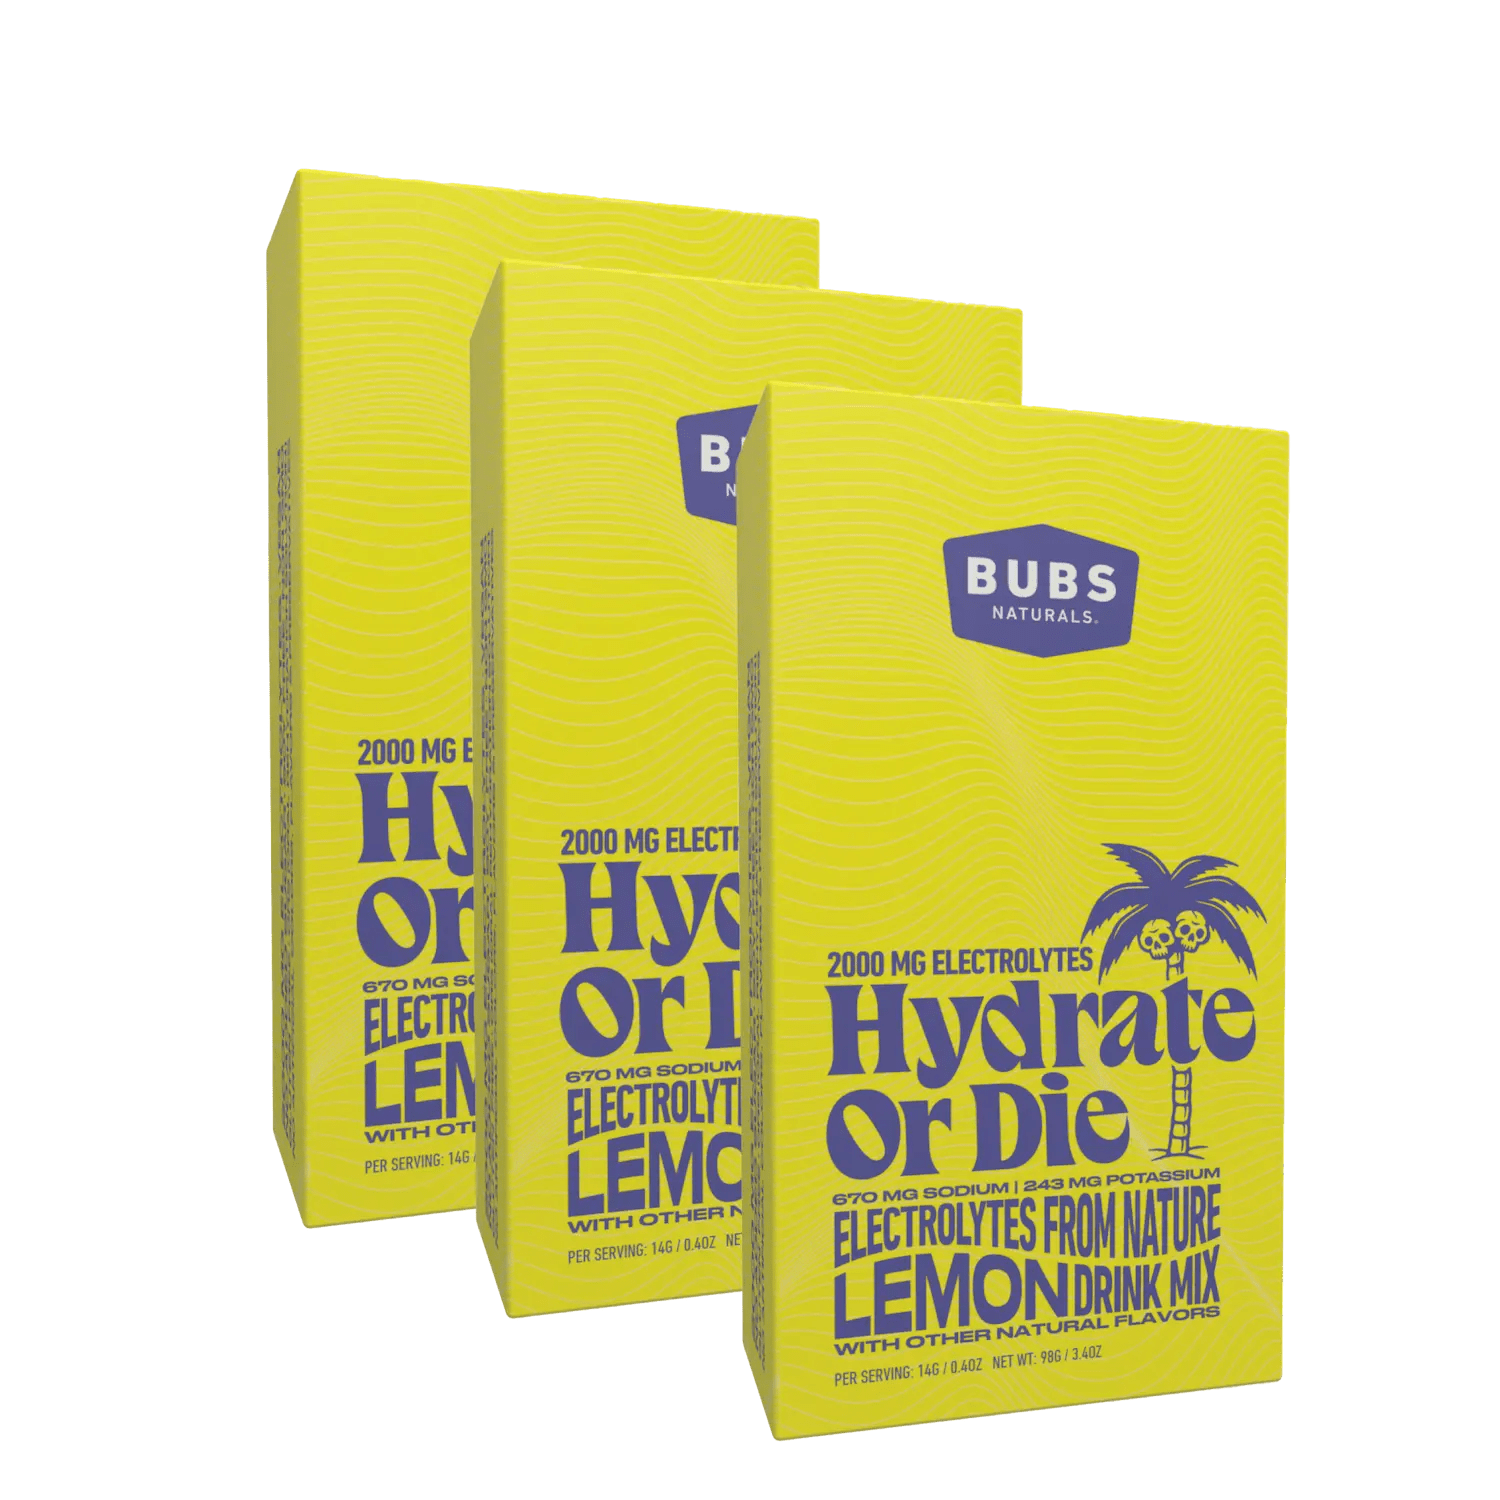 BUBS Naturals Hydrate or Die Electrolyte Cartons, Lemon, bundle of 3